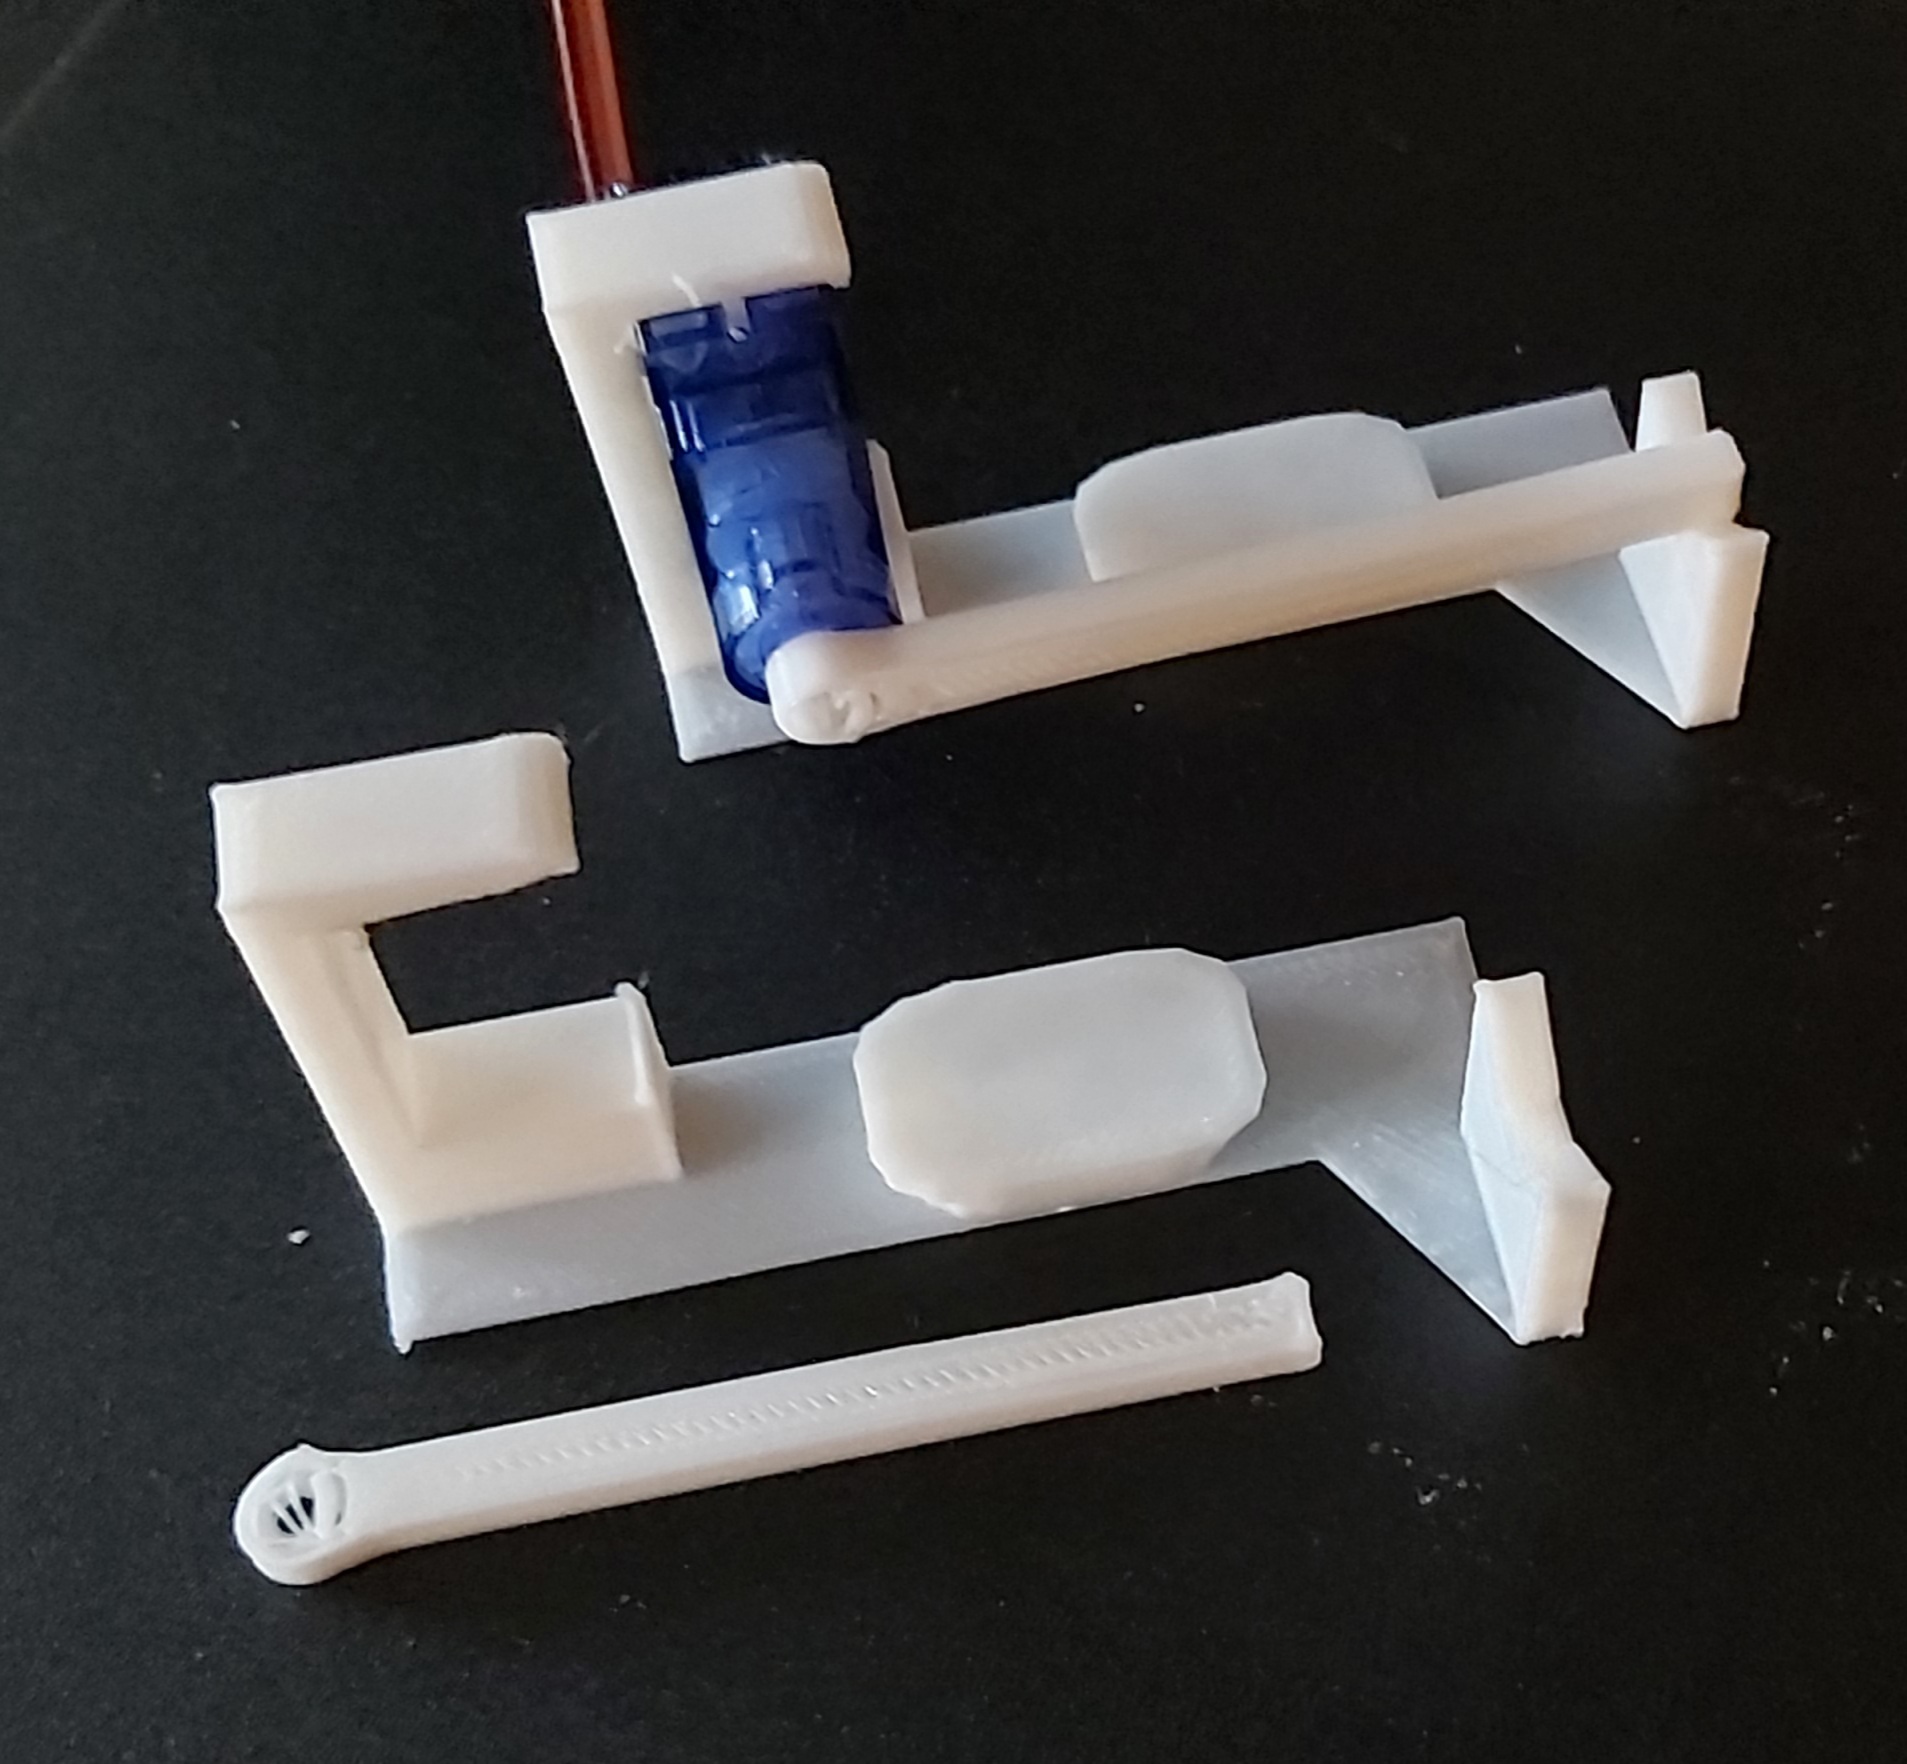 3D-printed hot wheels gates